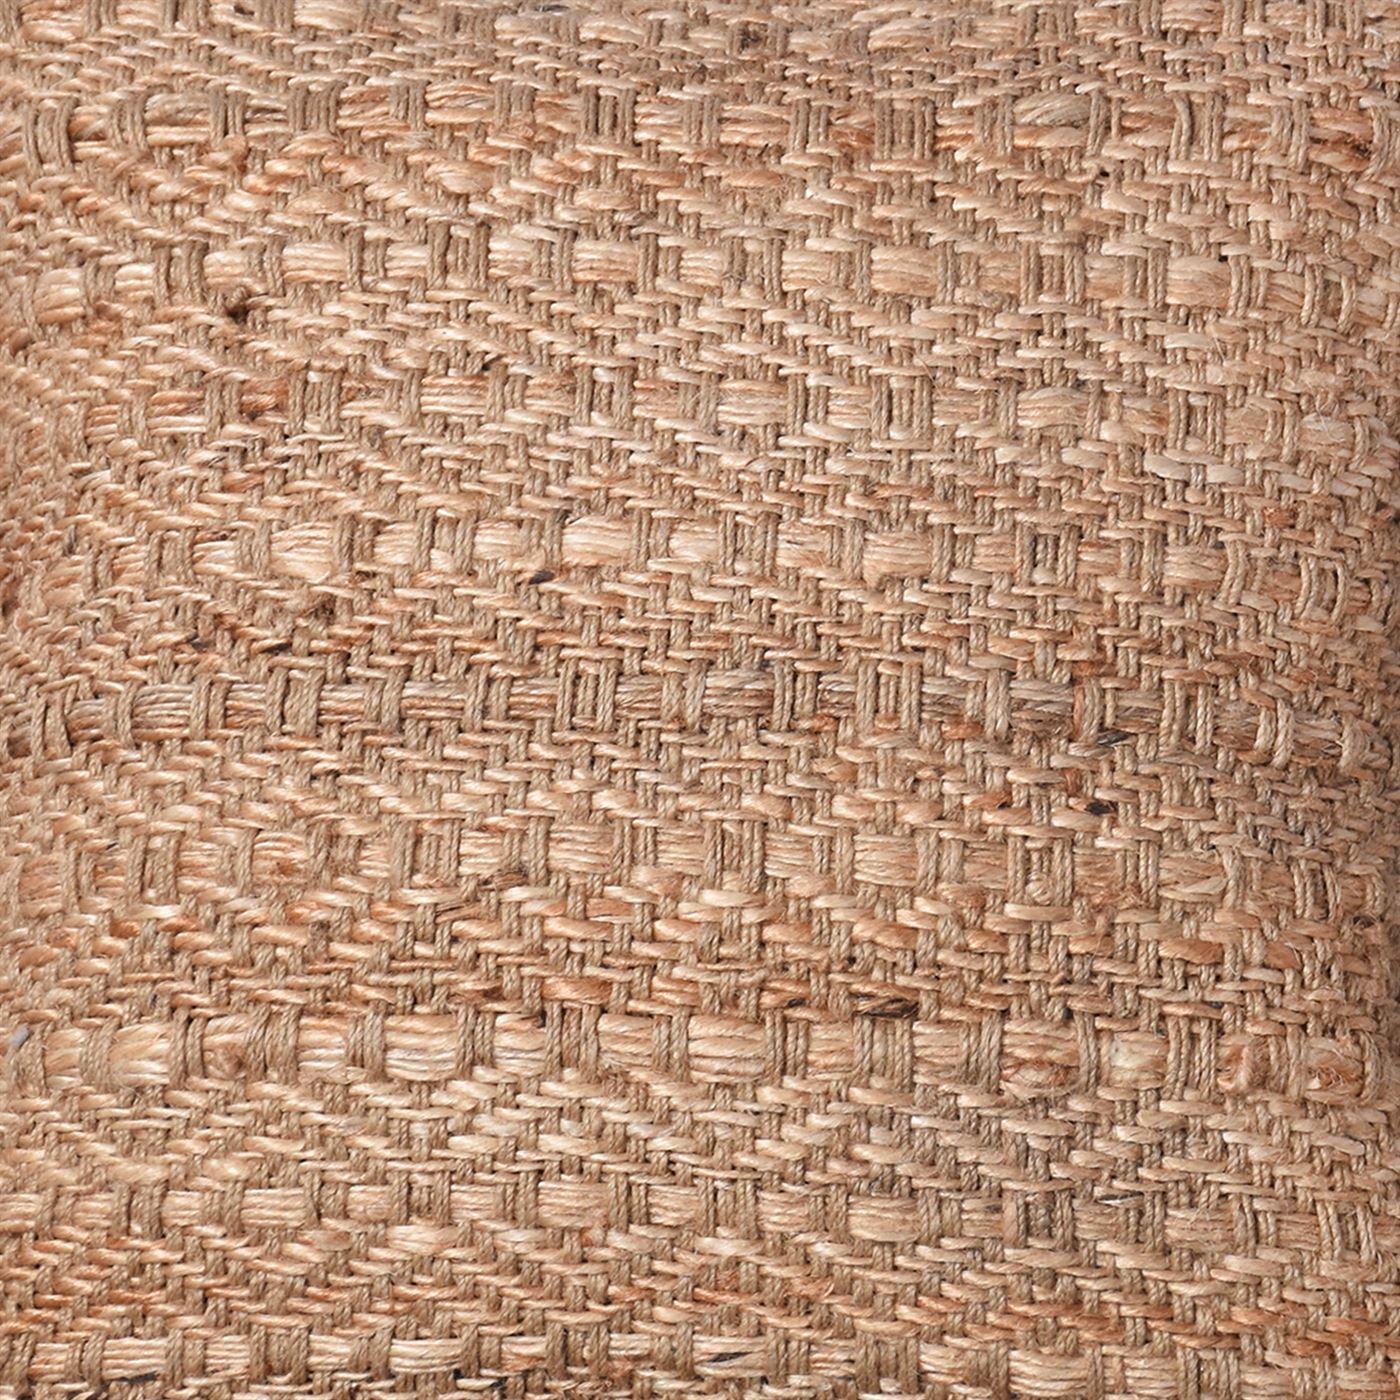 Satrup Cushion, Jute, Natural, Pitloom, Flat Weave